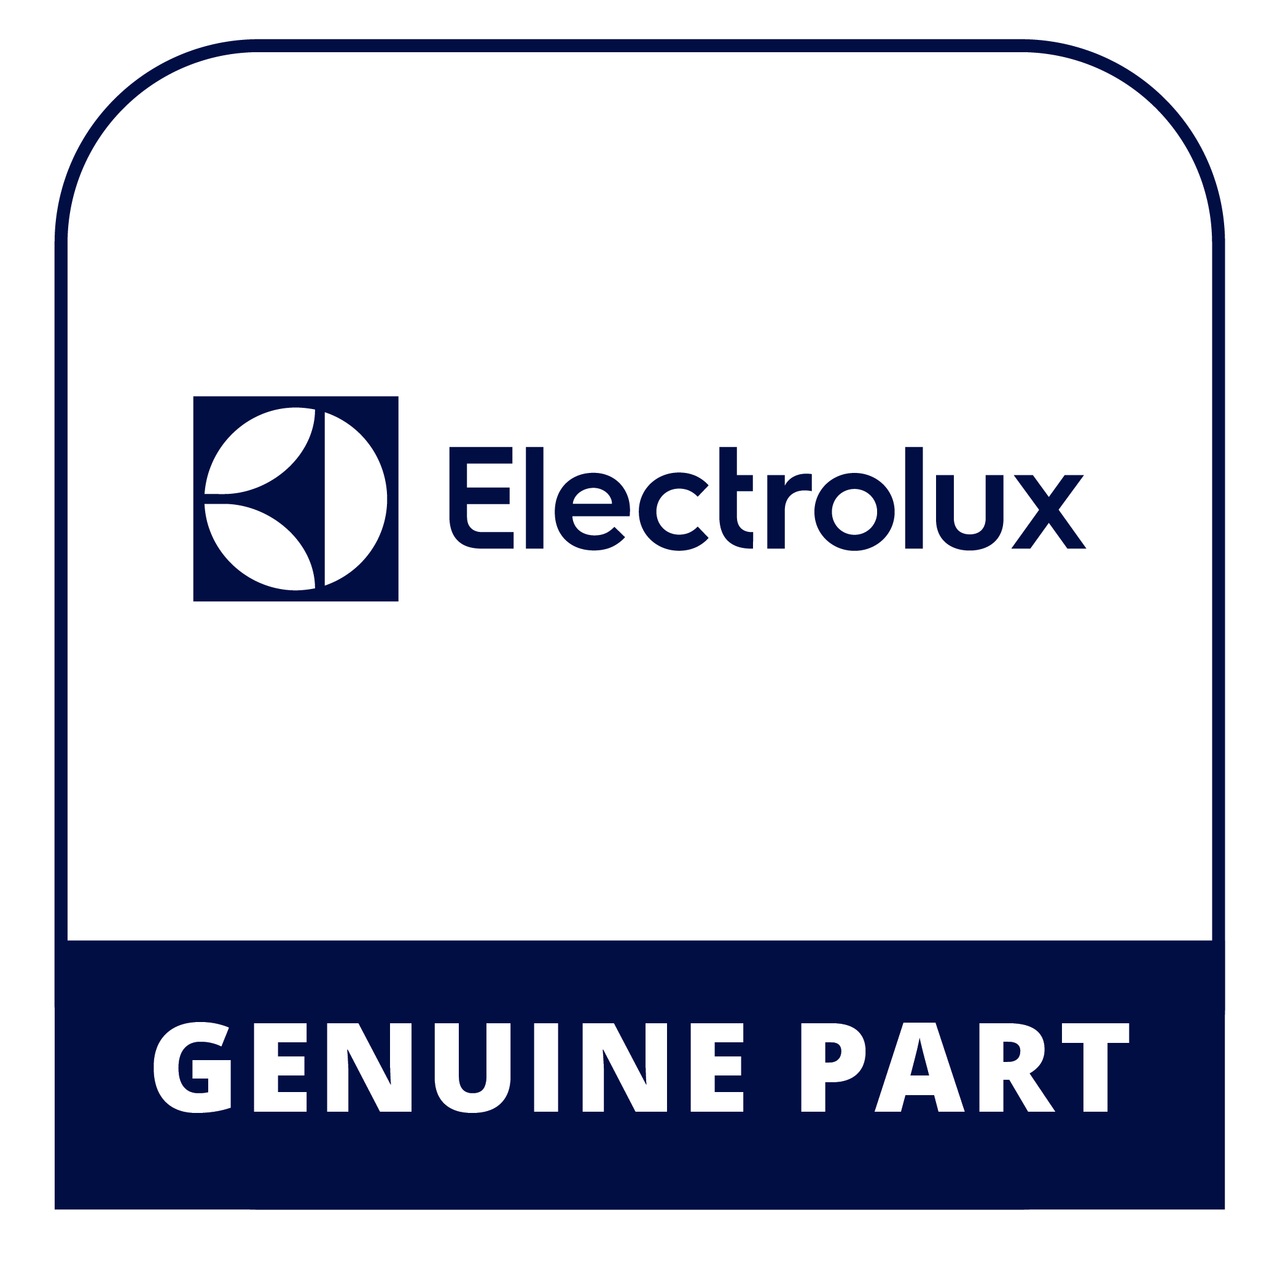 Frigidaire - Electrolux 154610501 Bracket - Genuine Electrolux Part